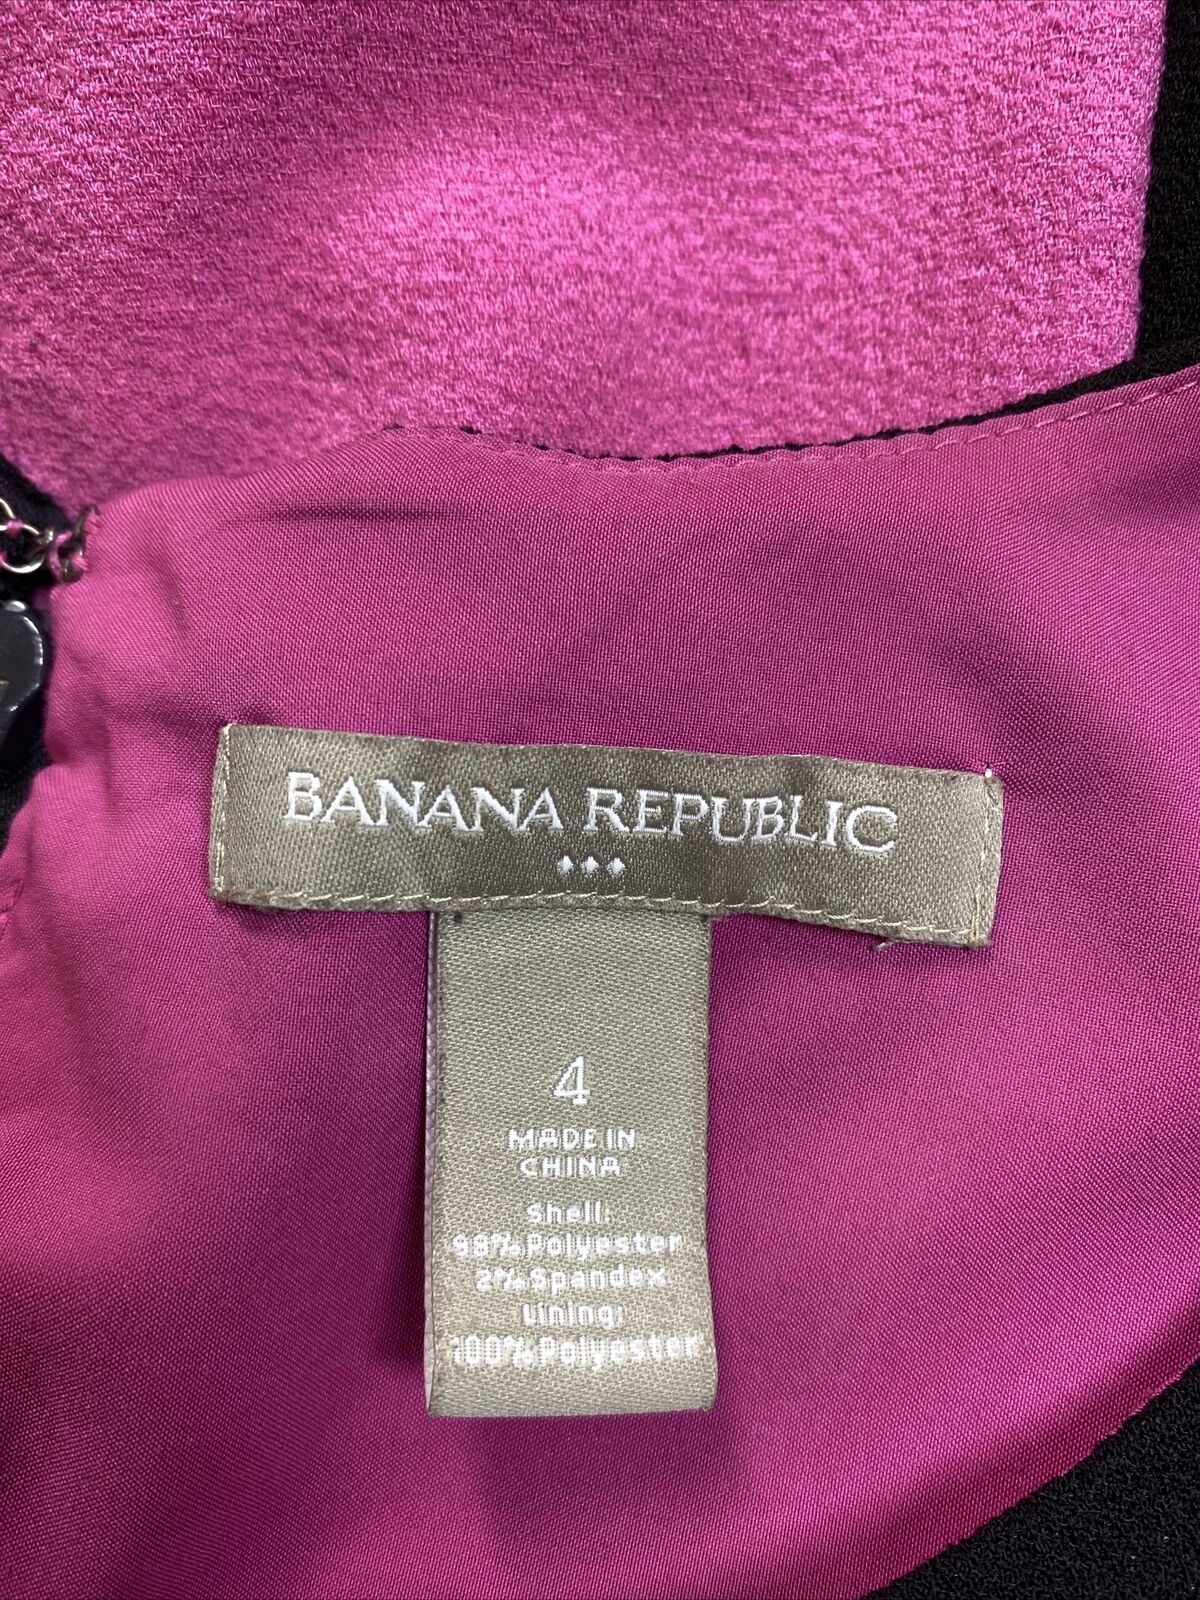 Banana Republic Vestido recto hasta la rodilla sin mangas, negro/rosa, para mujer - 4